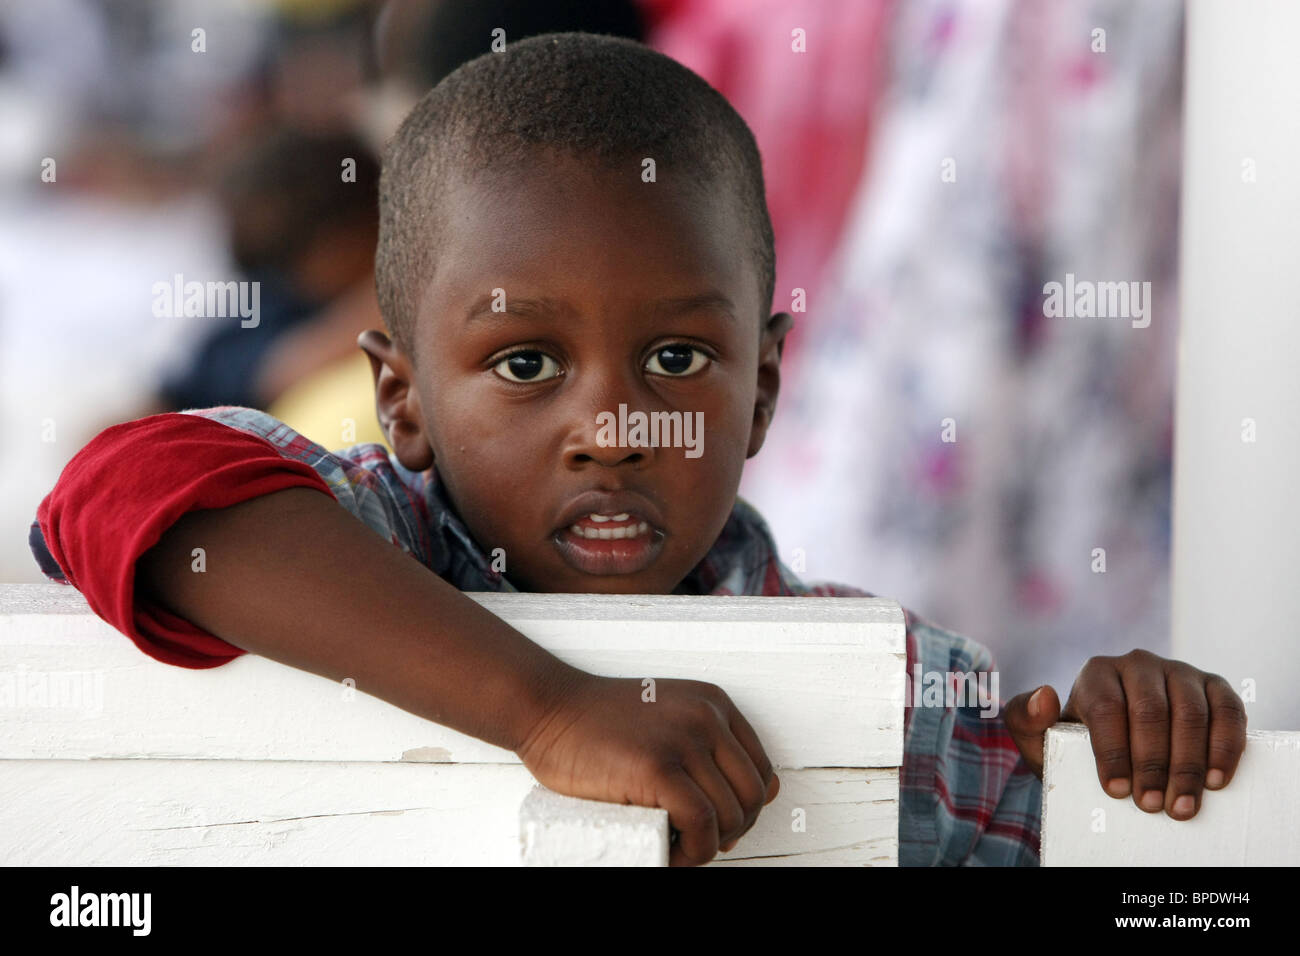 A boy looking at the photographer, Dubai, United Arab Emirates Stock Photo